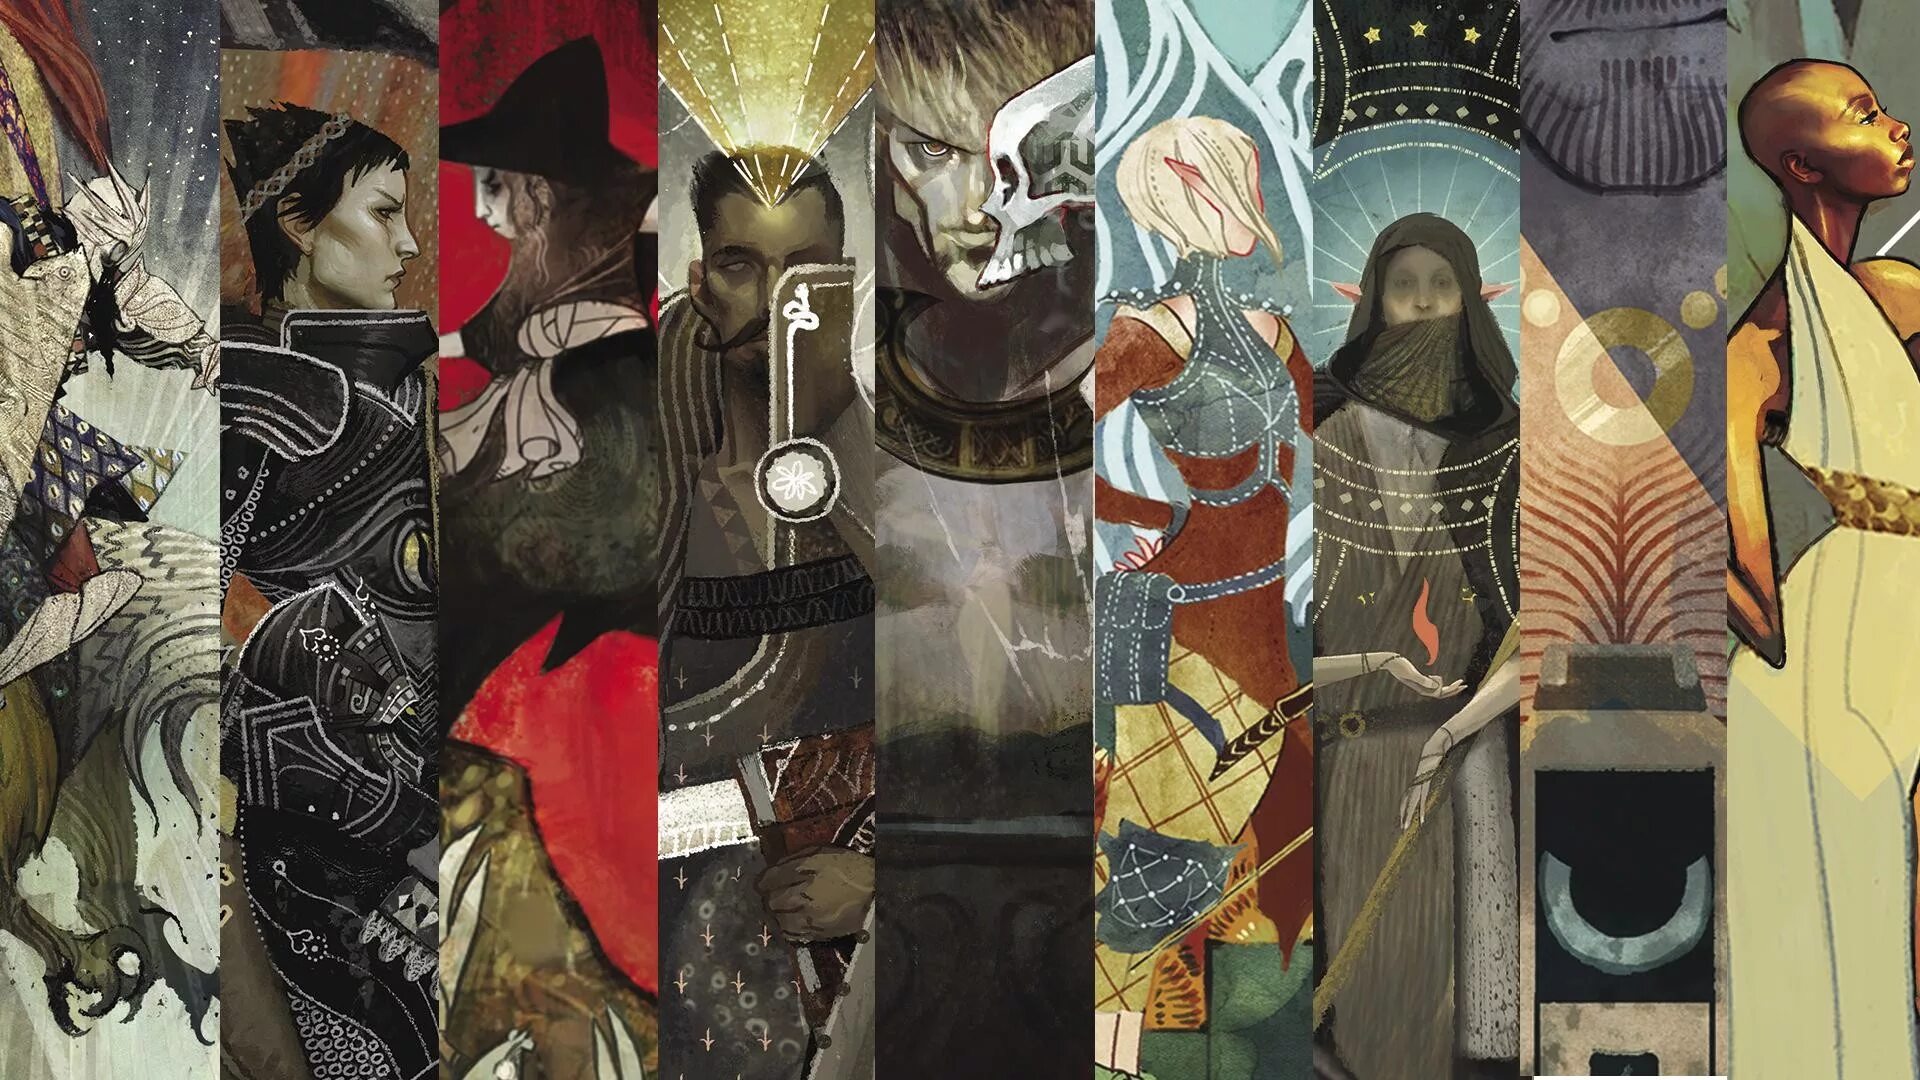 Dragon age quests. Dragon age. Dragon age 2 Inquisition. Dragon age 2 Tarot Card. Dragon age Inquisition Art Tarot.